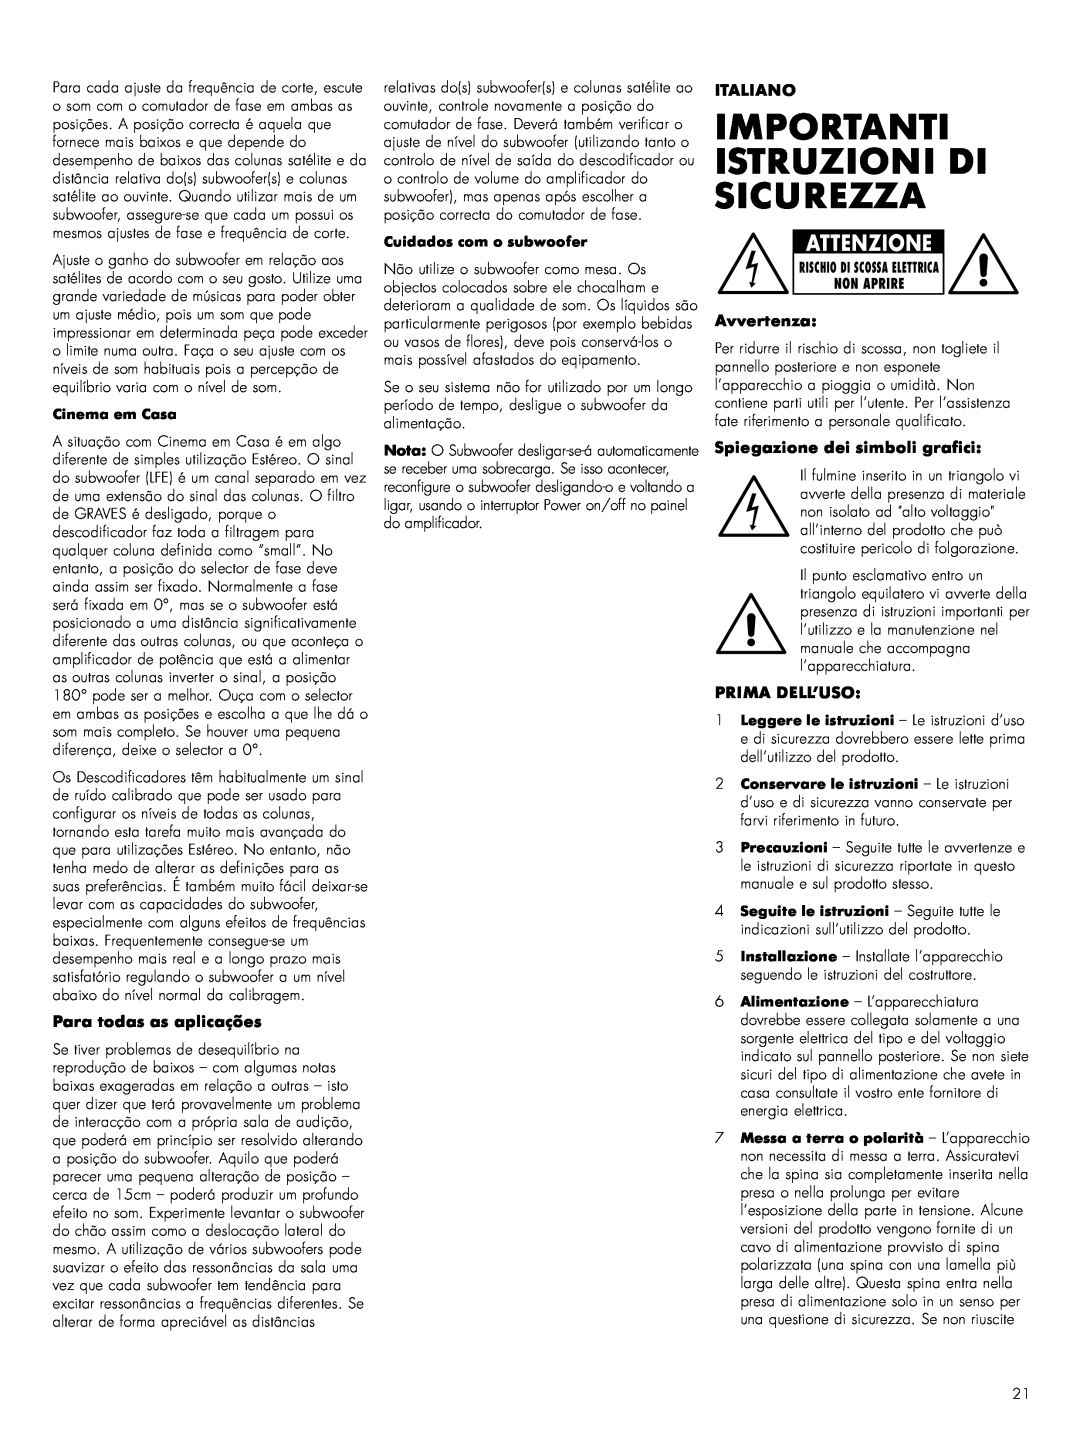 Bowers & Wilkins ASWCM Importanti Istruzioni Di Sicurezza, Attenzione, Para todas as aplicações, Italiano, Avvertenza 